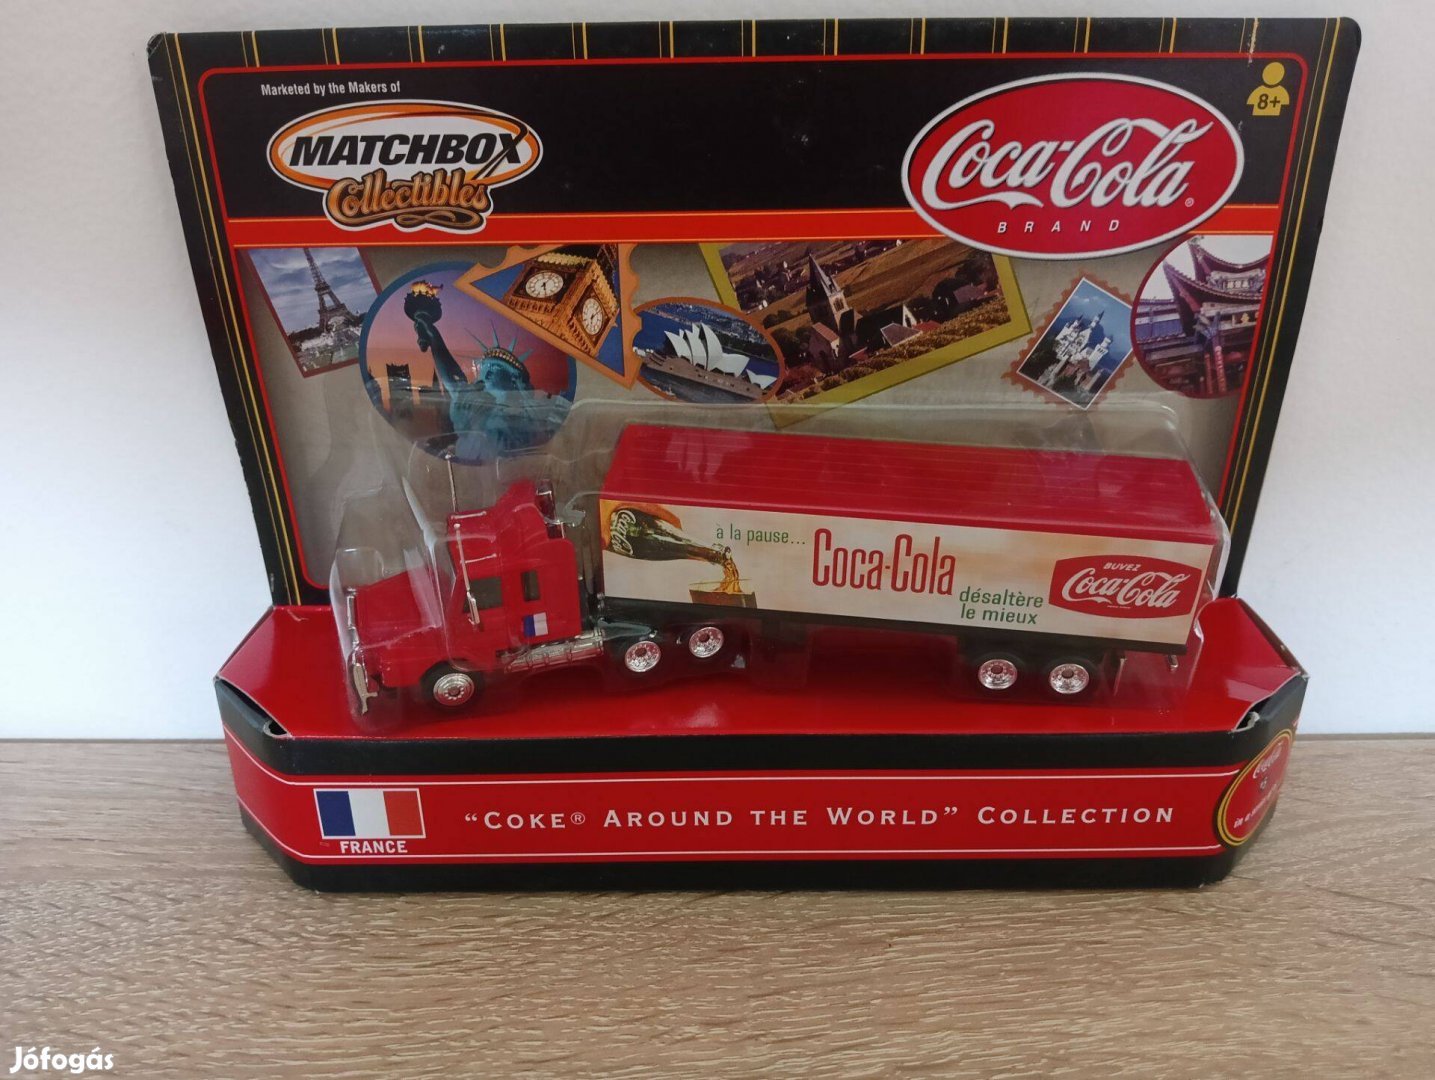 Matchbox collectible Coca Cola Coke around the world semi truck France